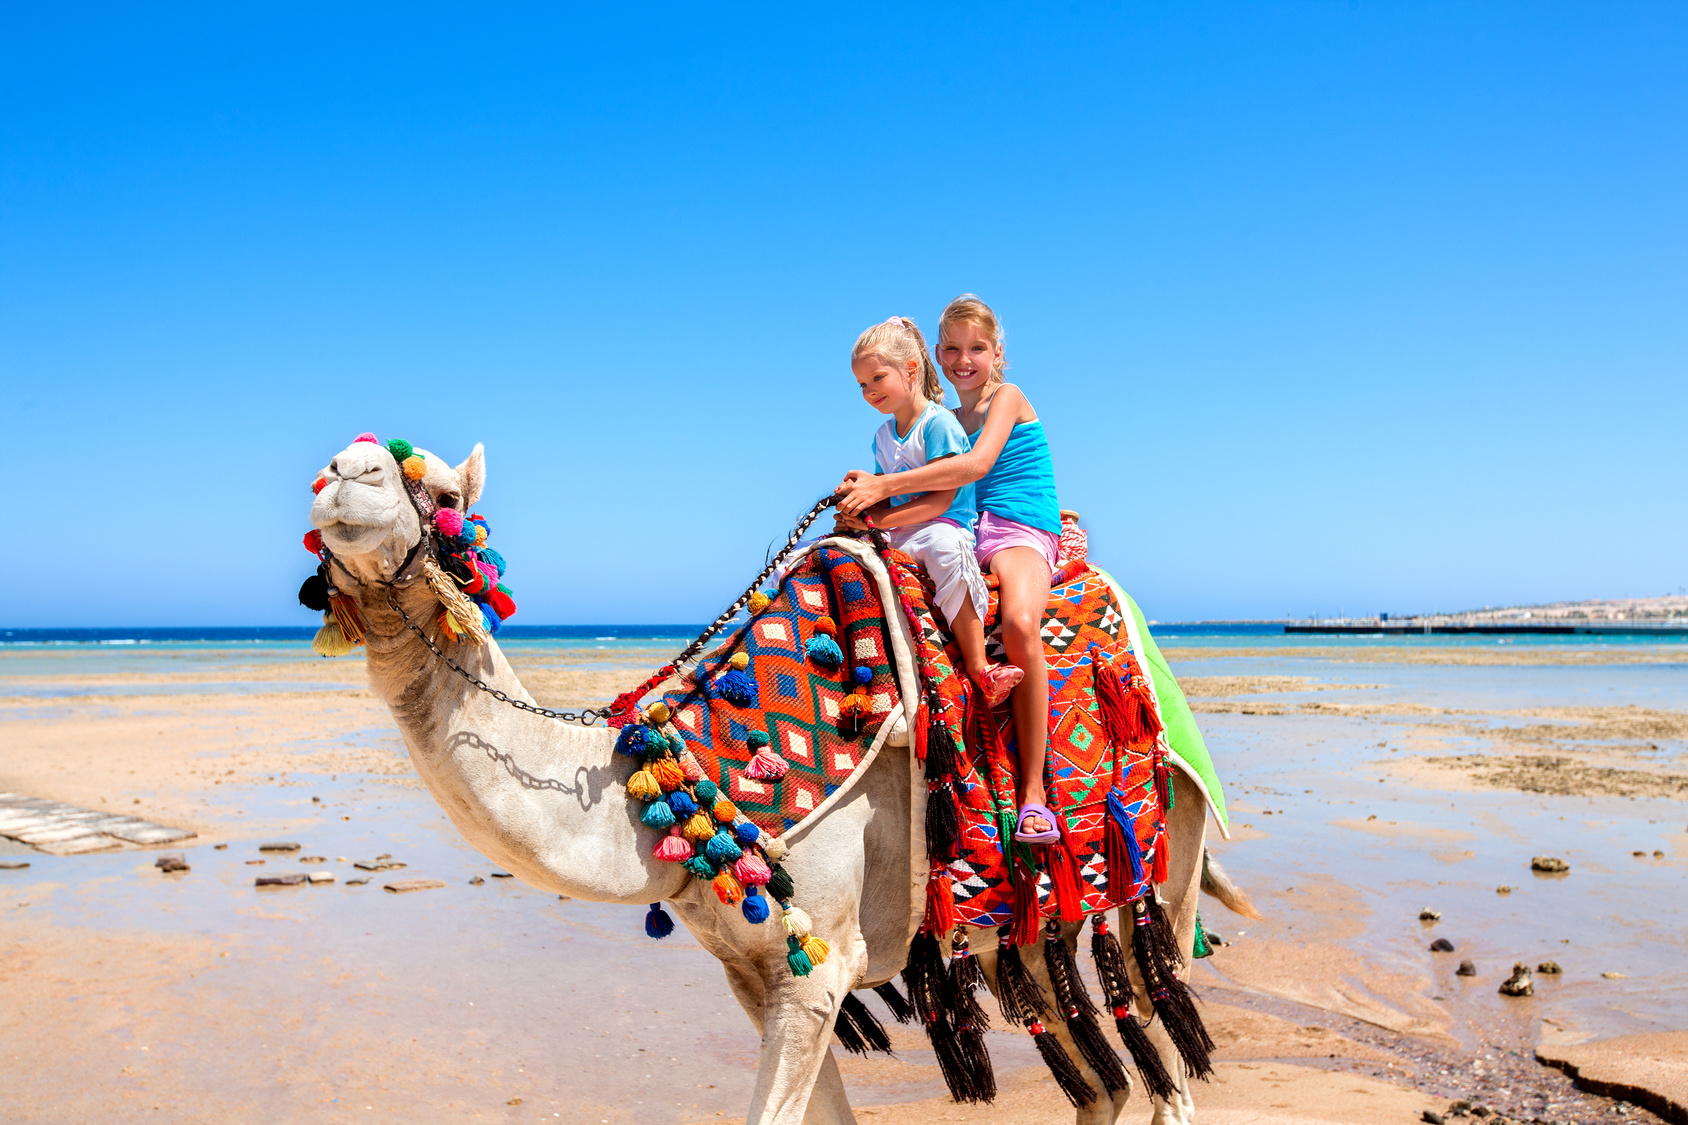 Children riding camel on beach